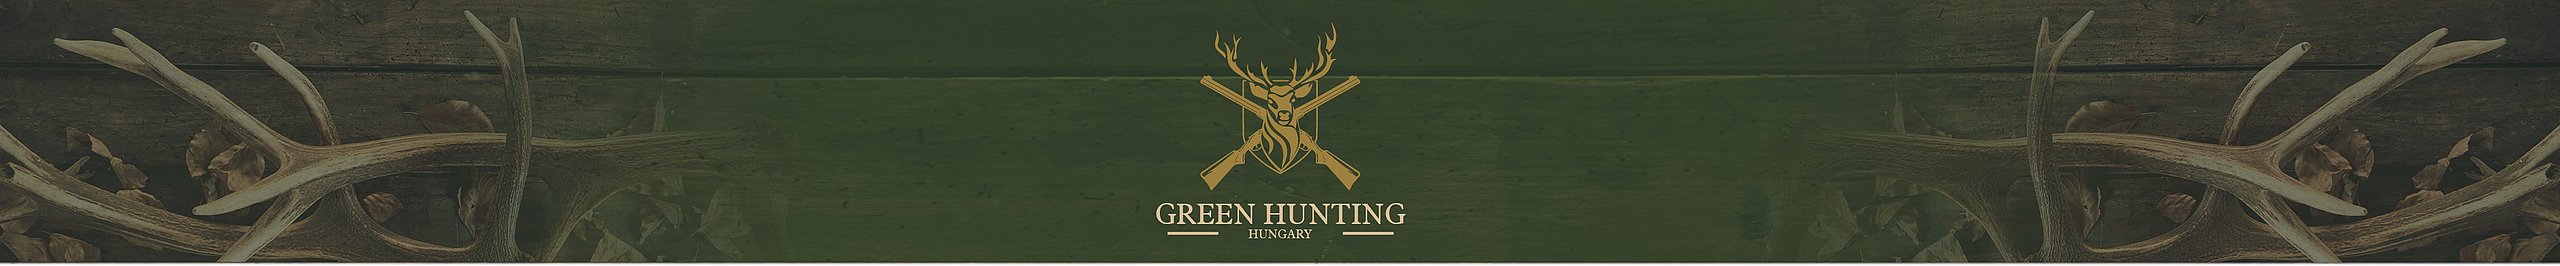 BT-Green Hunting Trenner